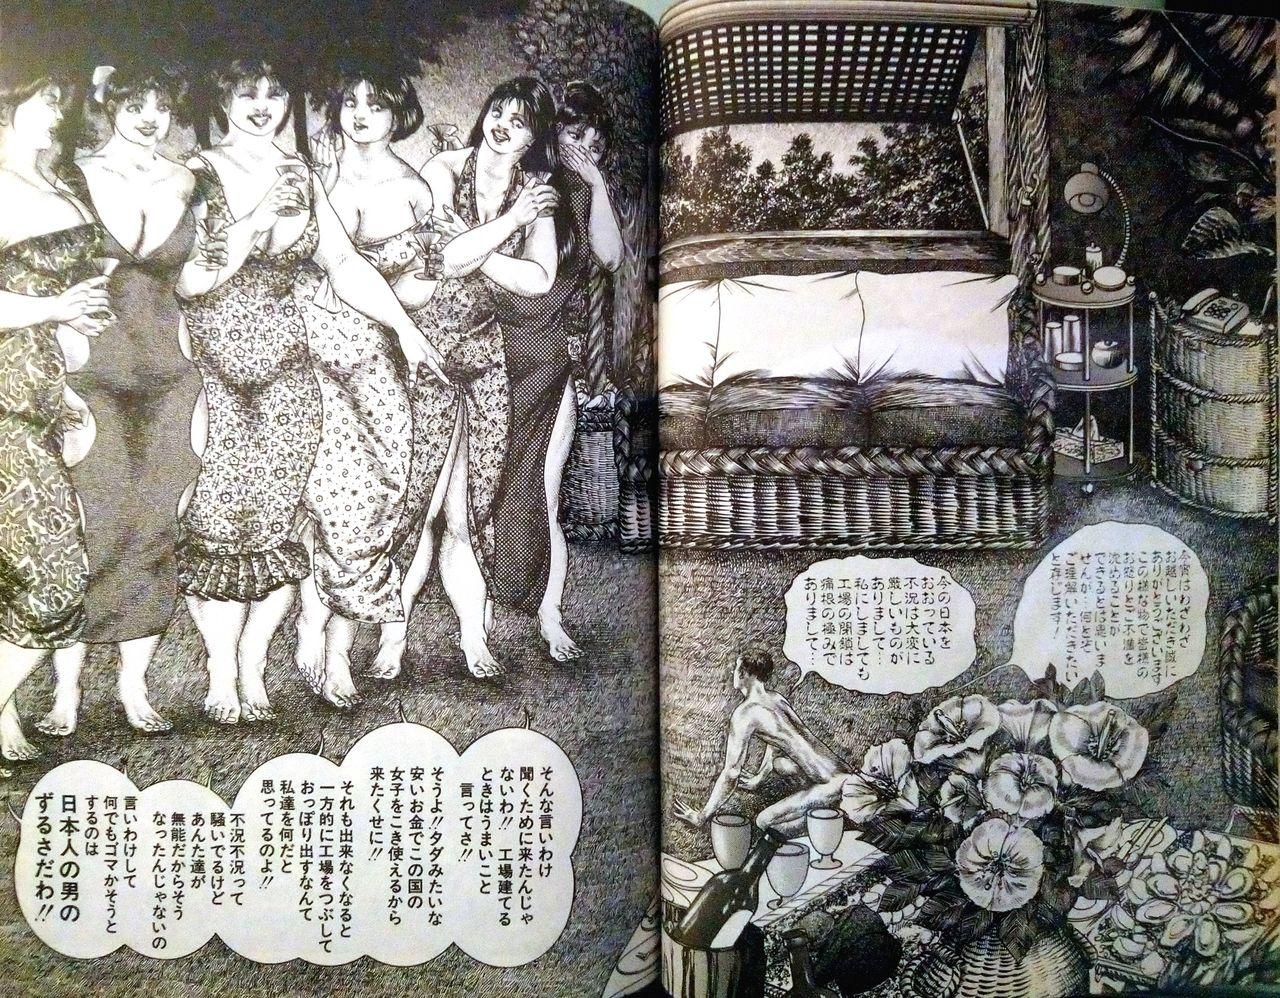 Hiroshi Tatsumi Book 2 - Chapitre 1 - "Group Of Merciless" 40